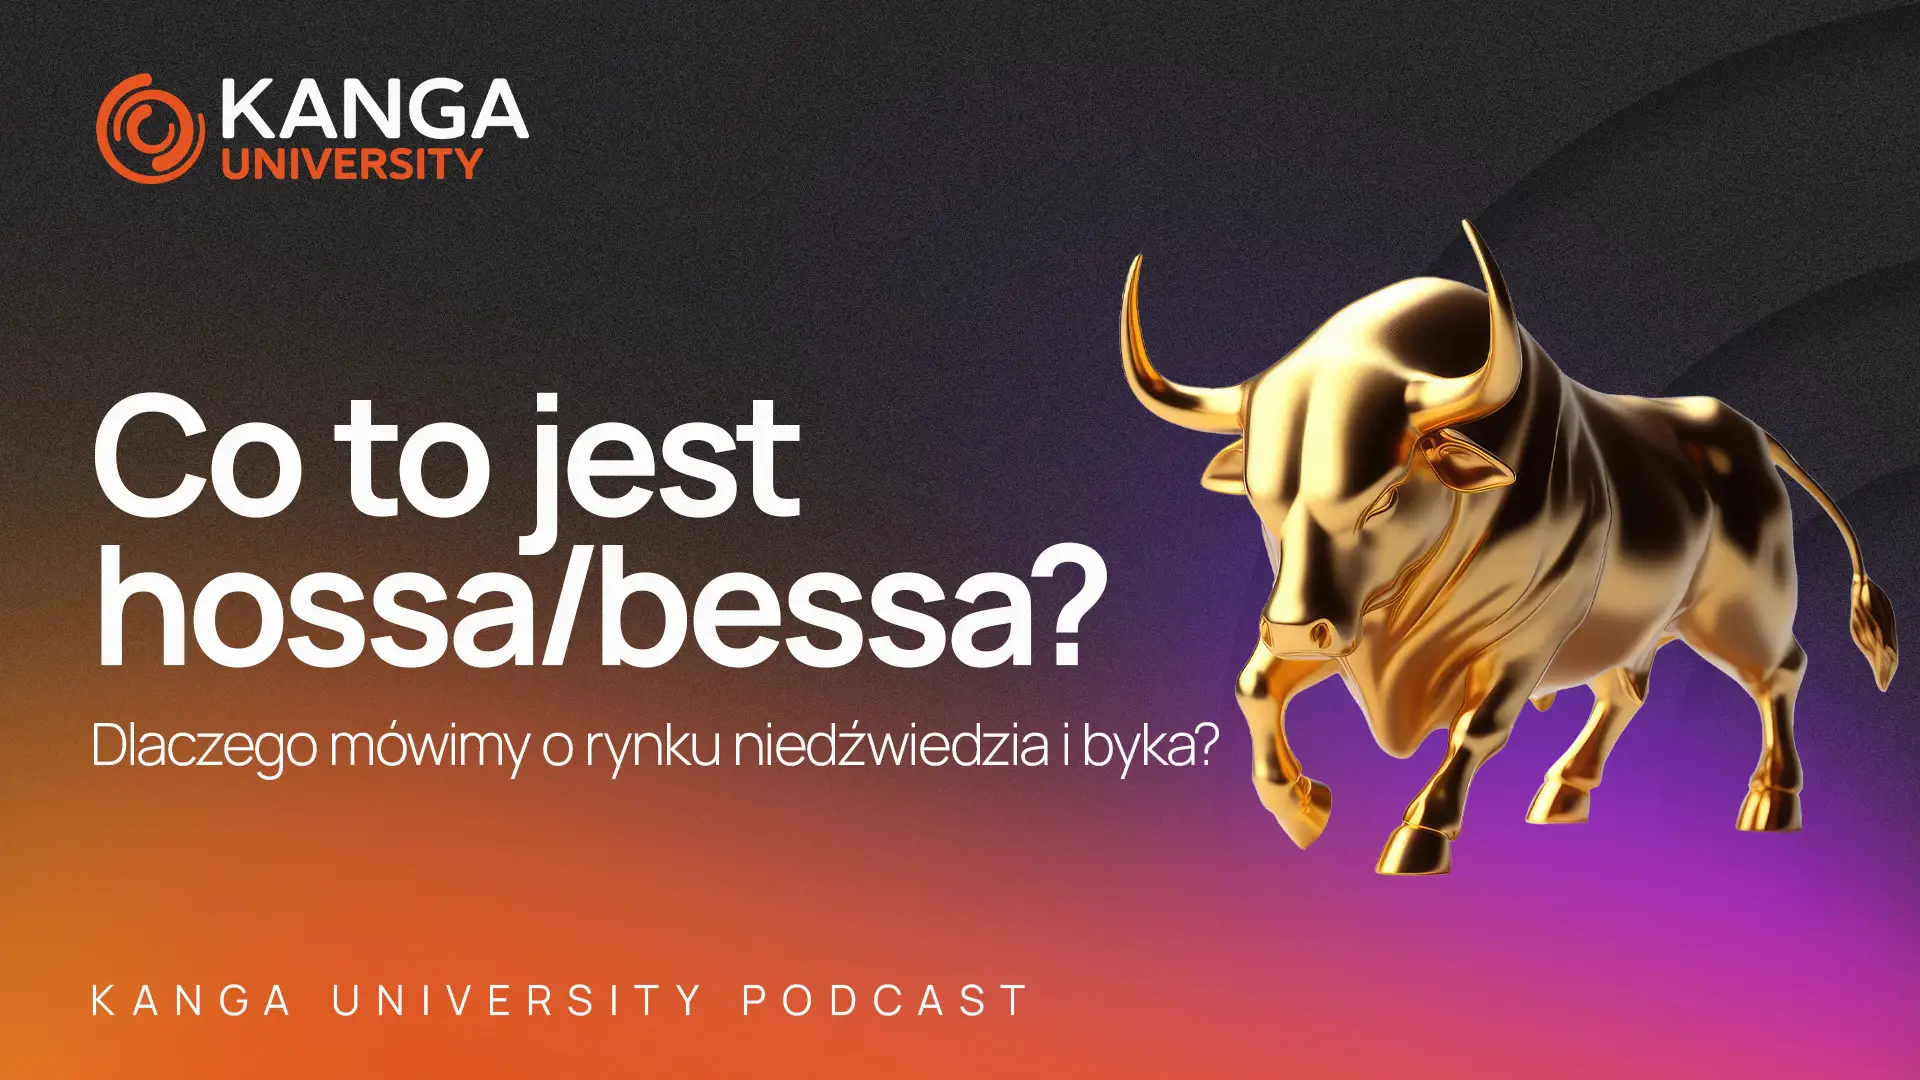 Kanga University Podcast #14 | Co to jest hossa/bessa? Część I